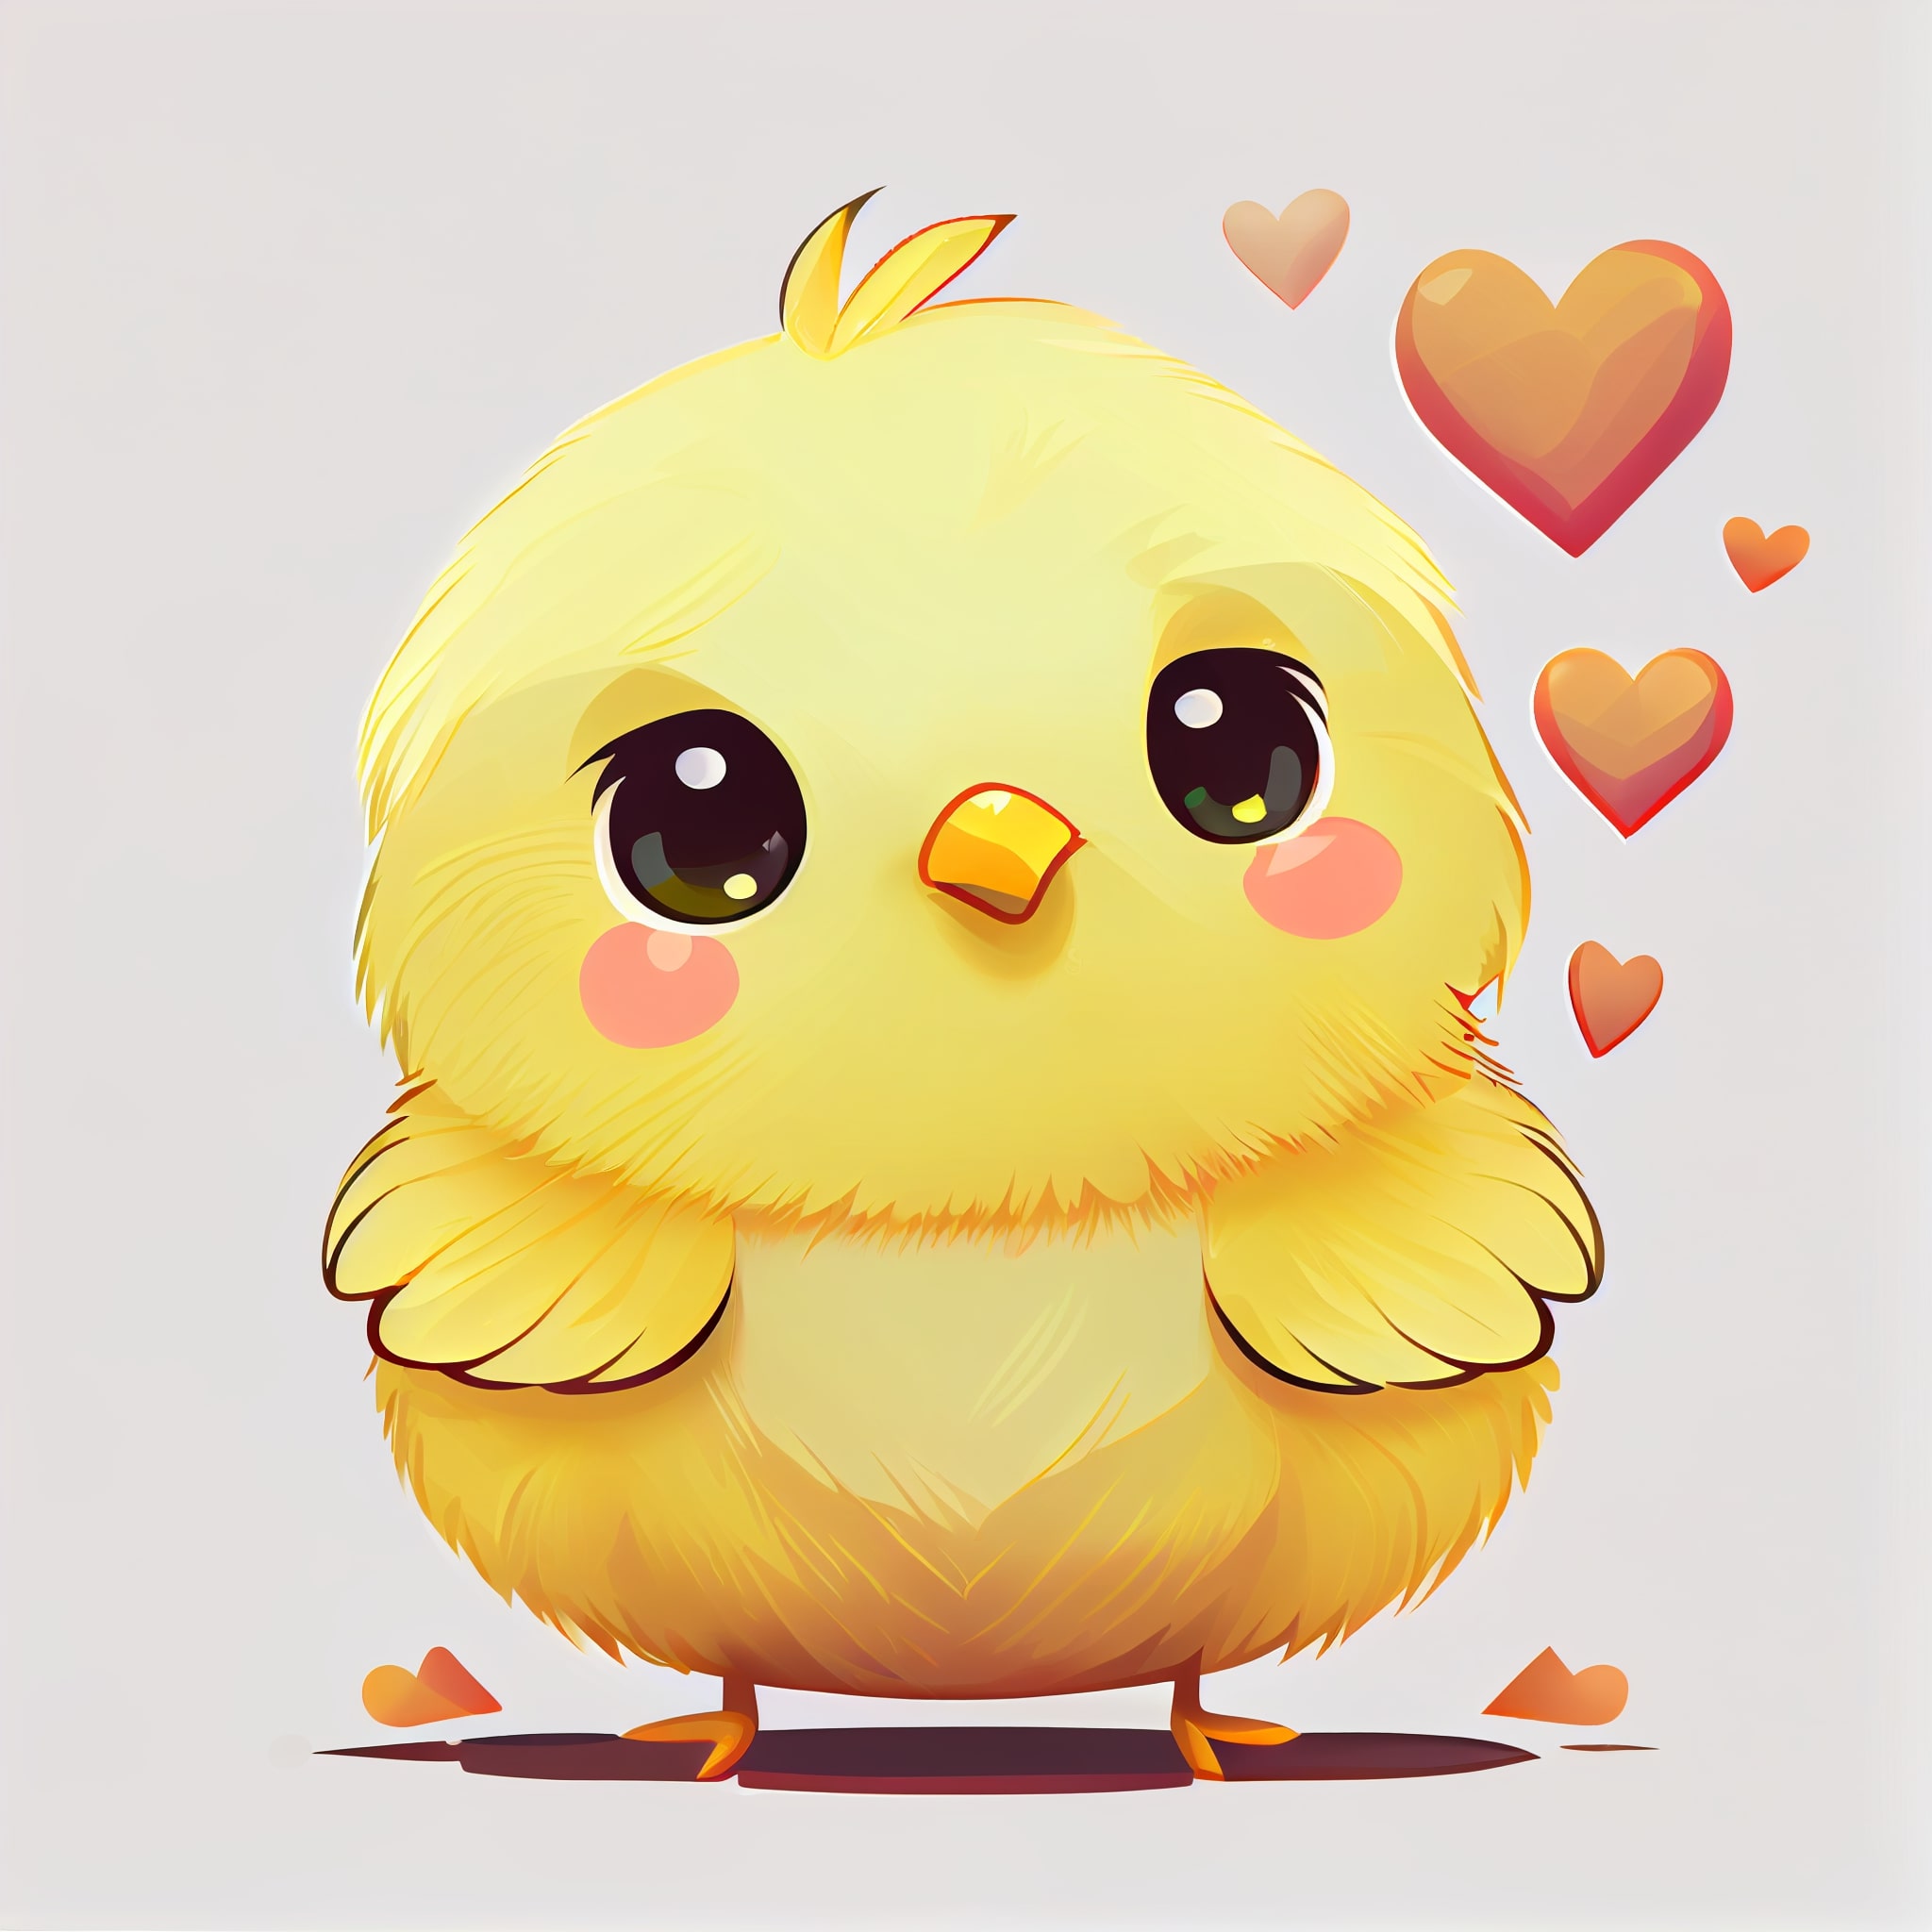 Cute little yellow bird with big eyes.